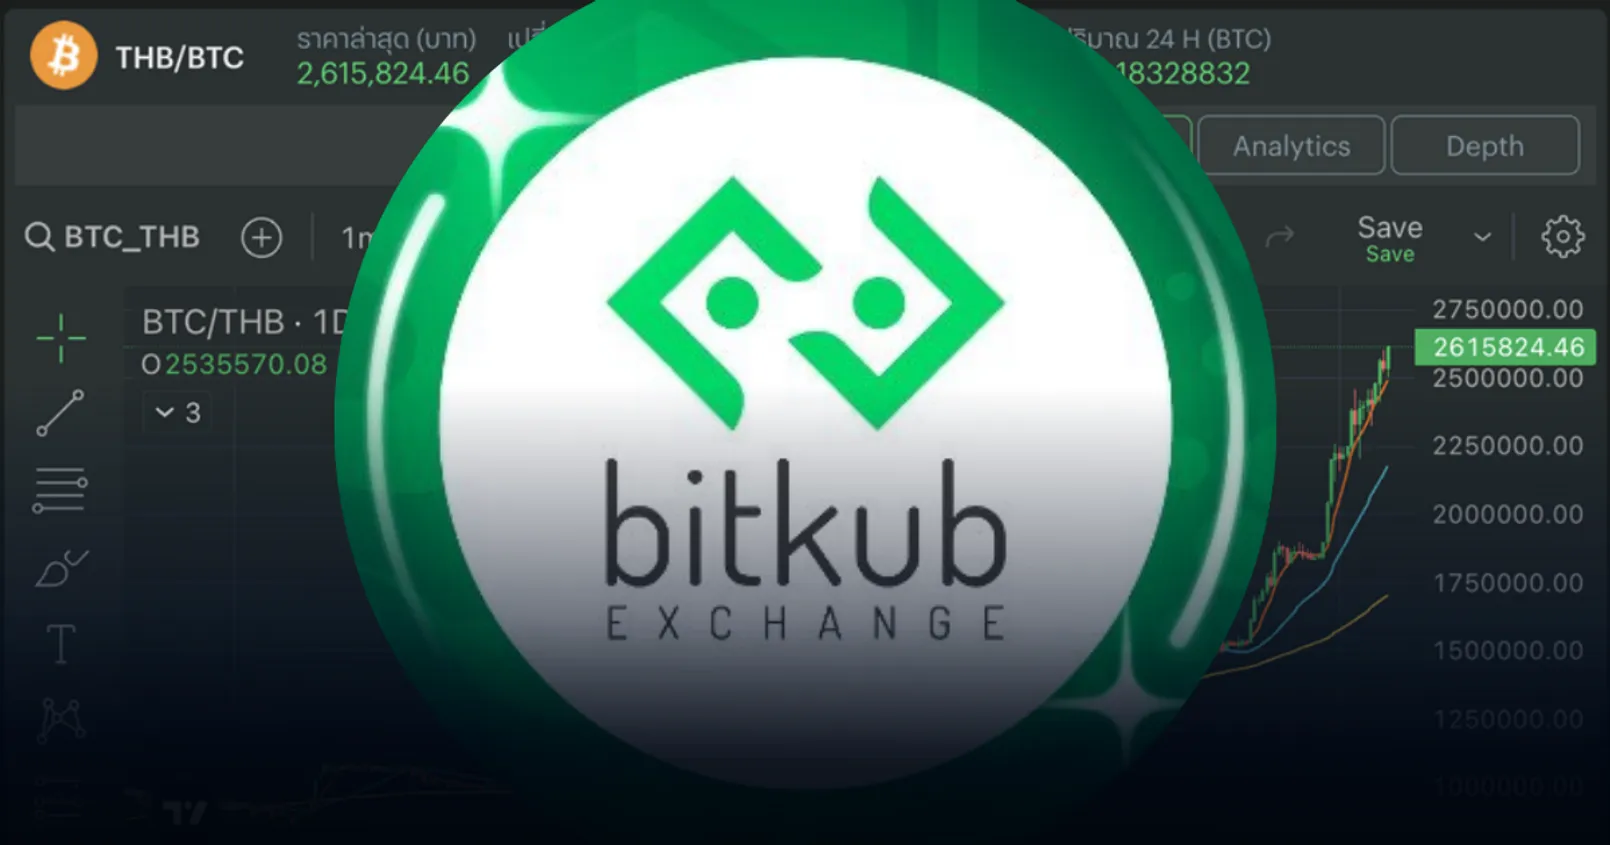 Bitcoin (BTC) ทำระดับสูงสุดใหม่ที่ 2,620,000 บาท บนกระดาน Bitkub Exchange